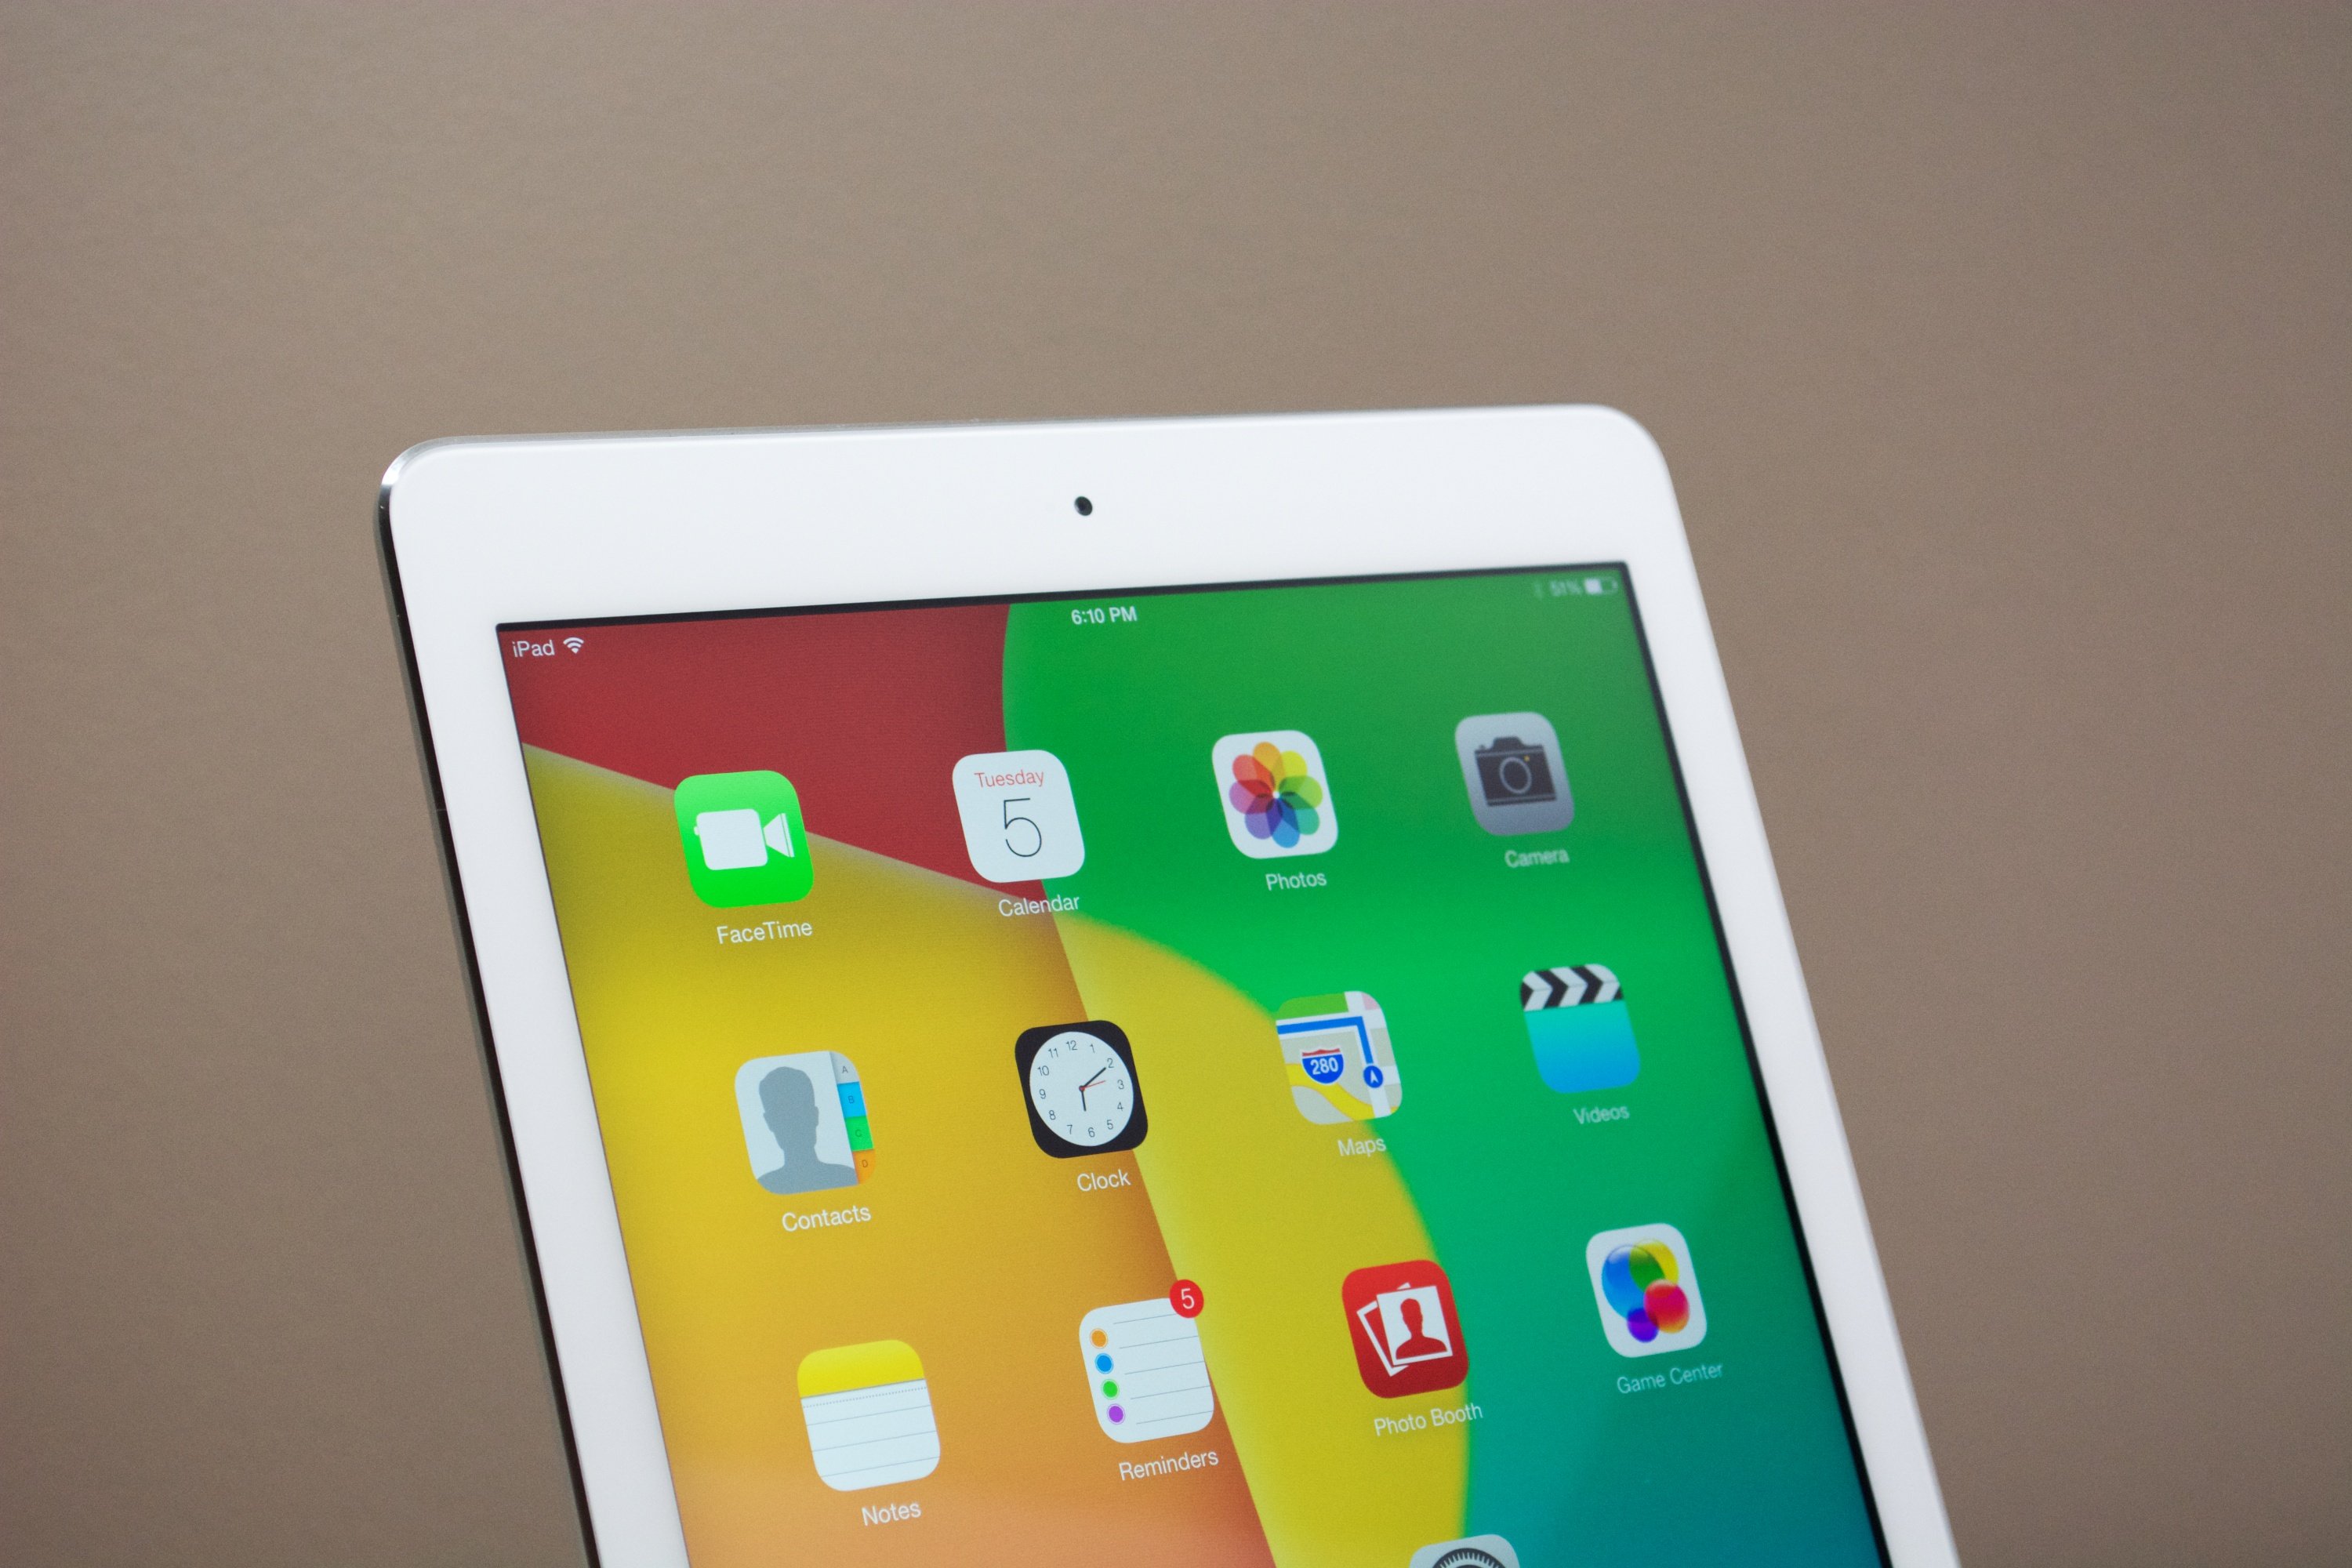 The Retina display is a major iPad feature for the iPad Air and new iPad mini.